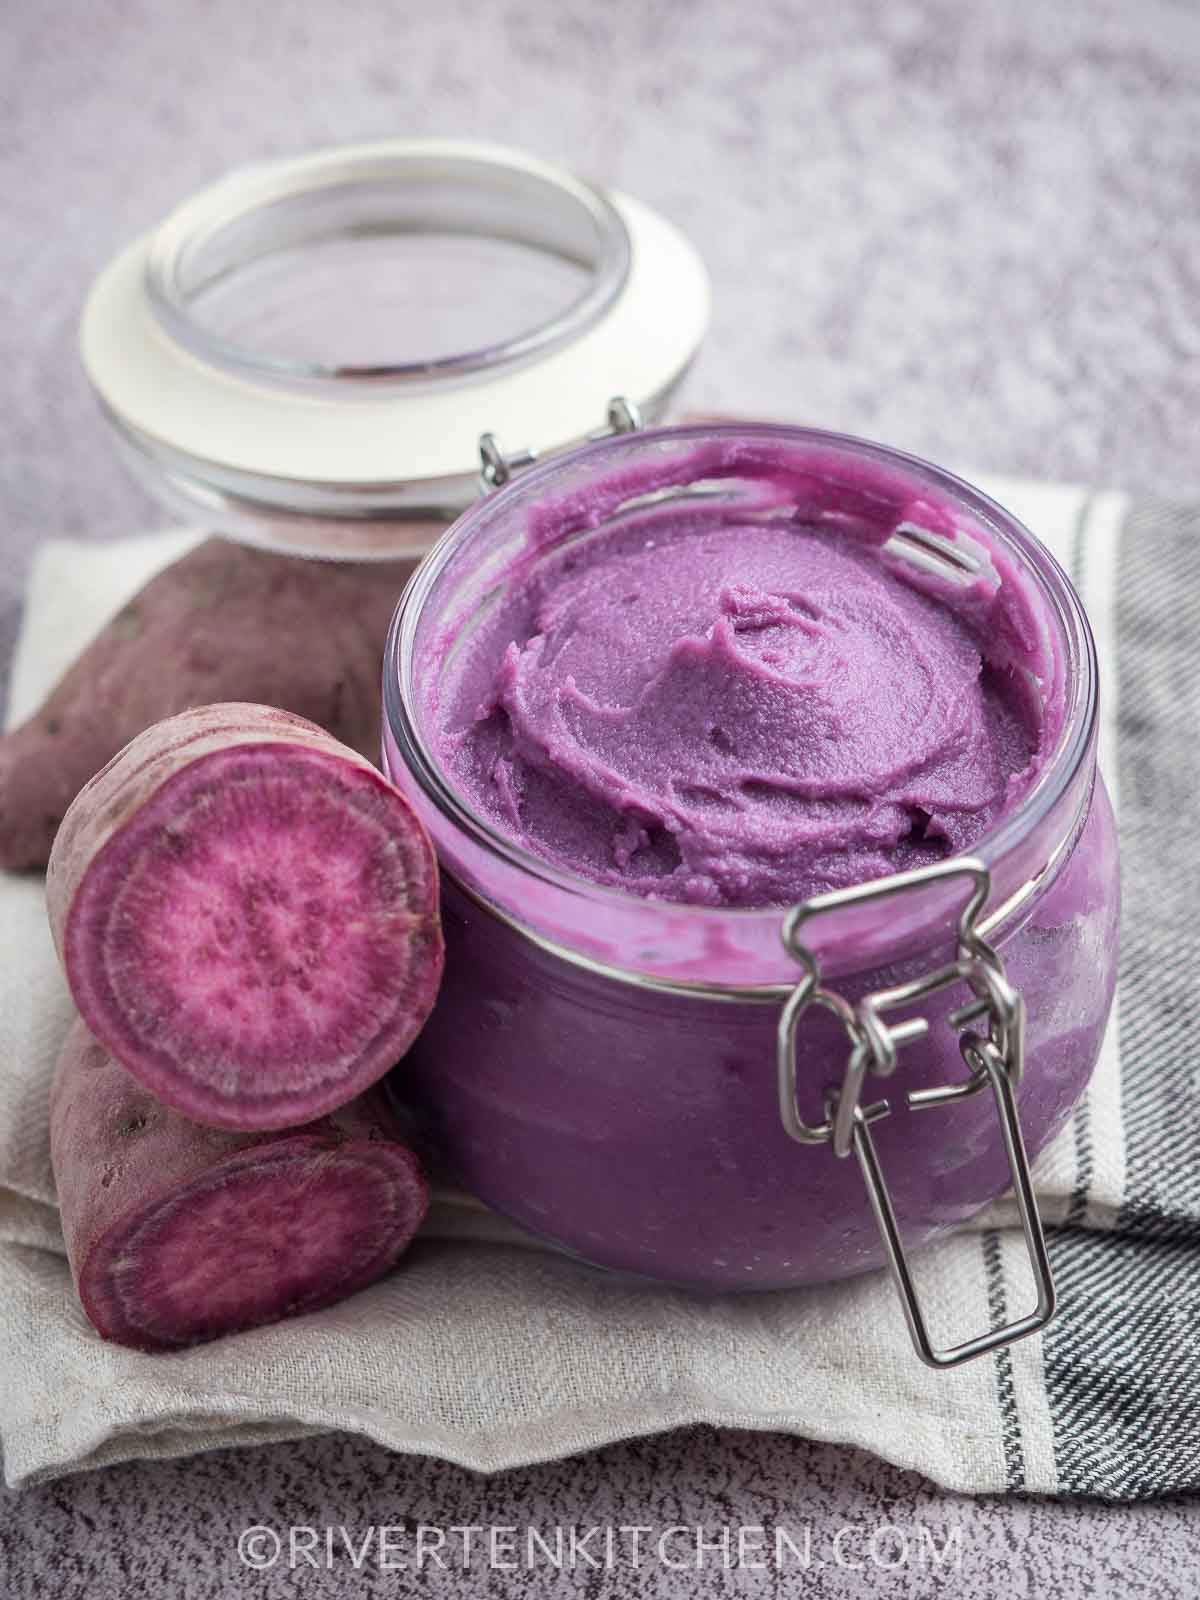 Ube Halaya made of purple yam or sweet purple potato